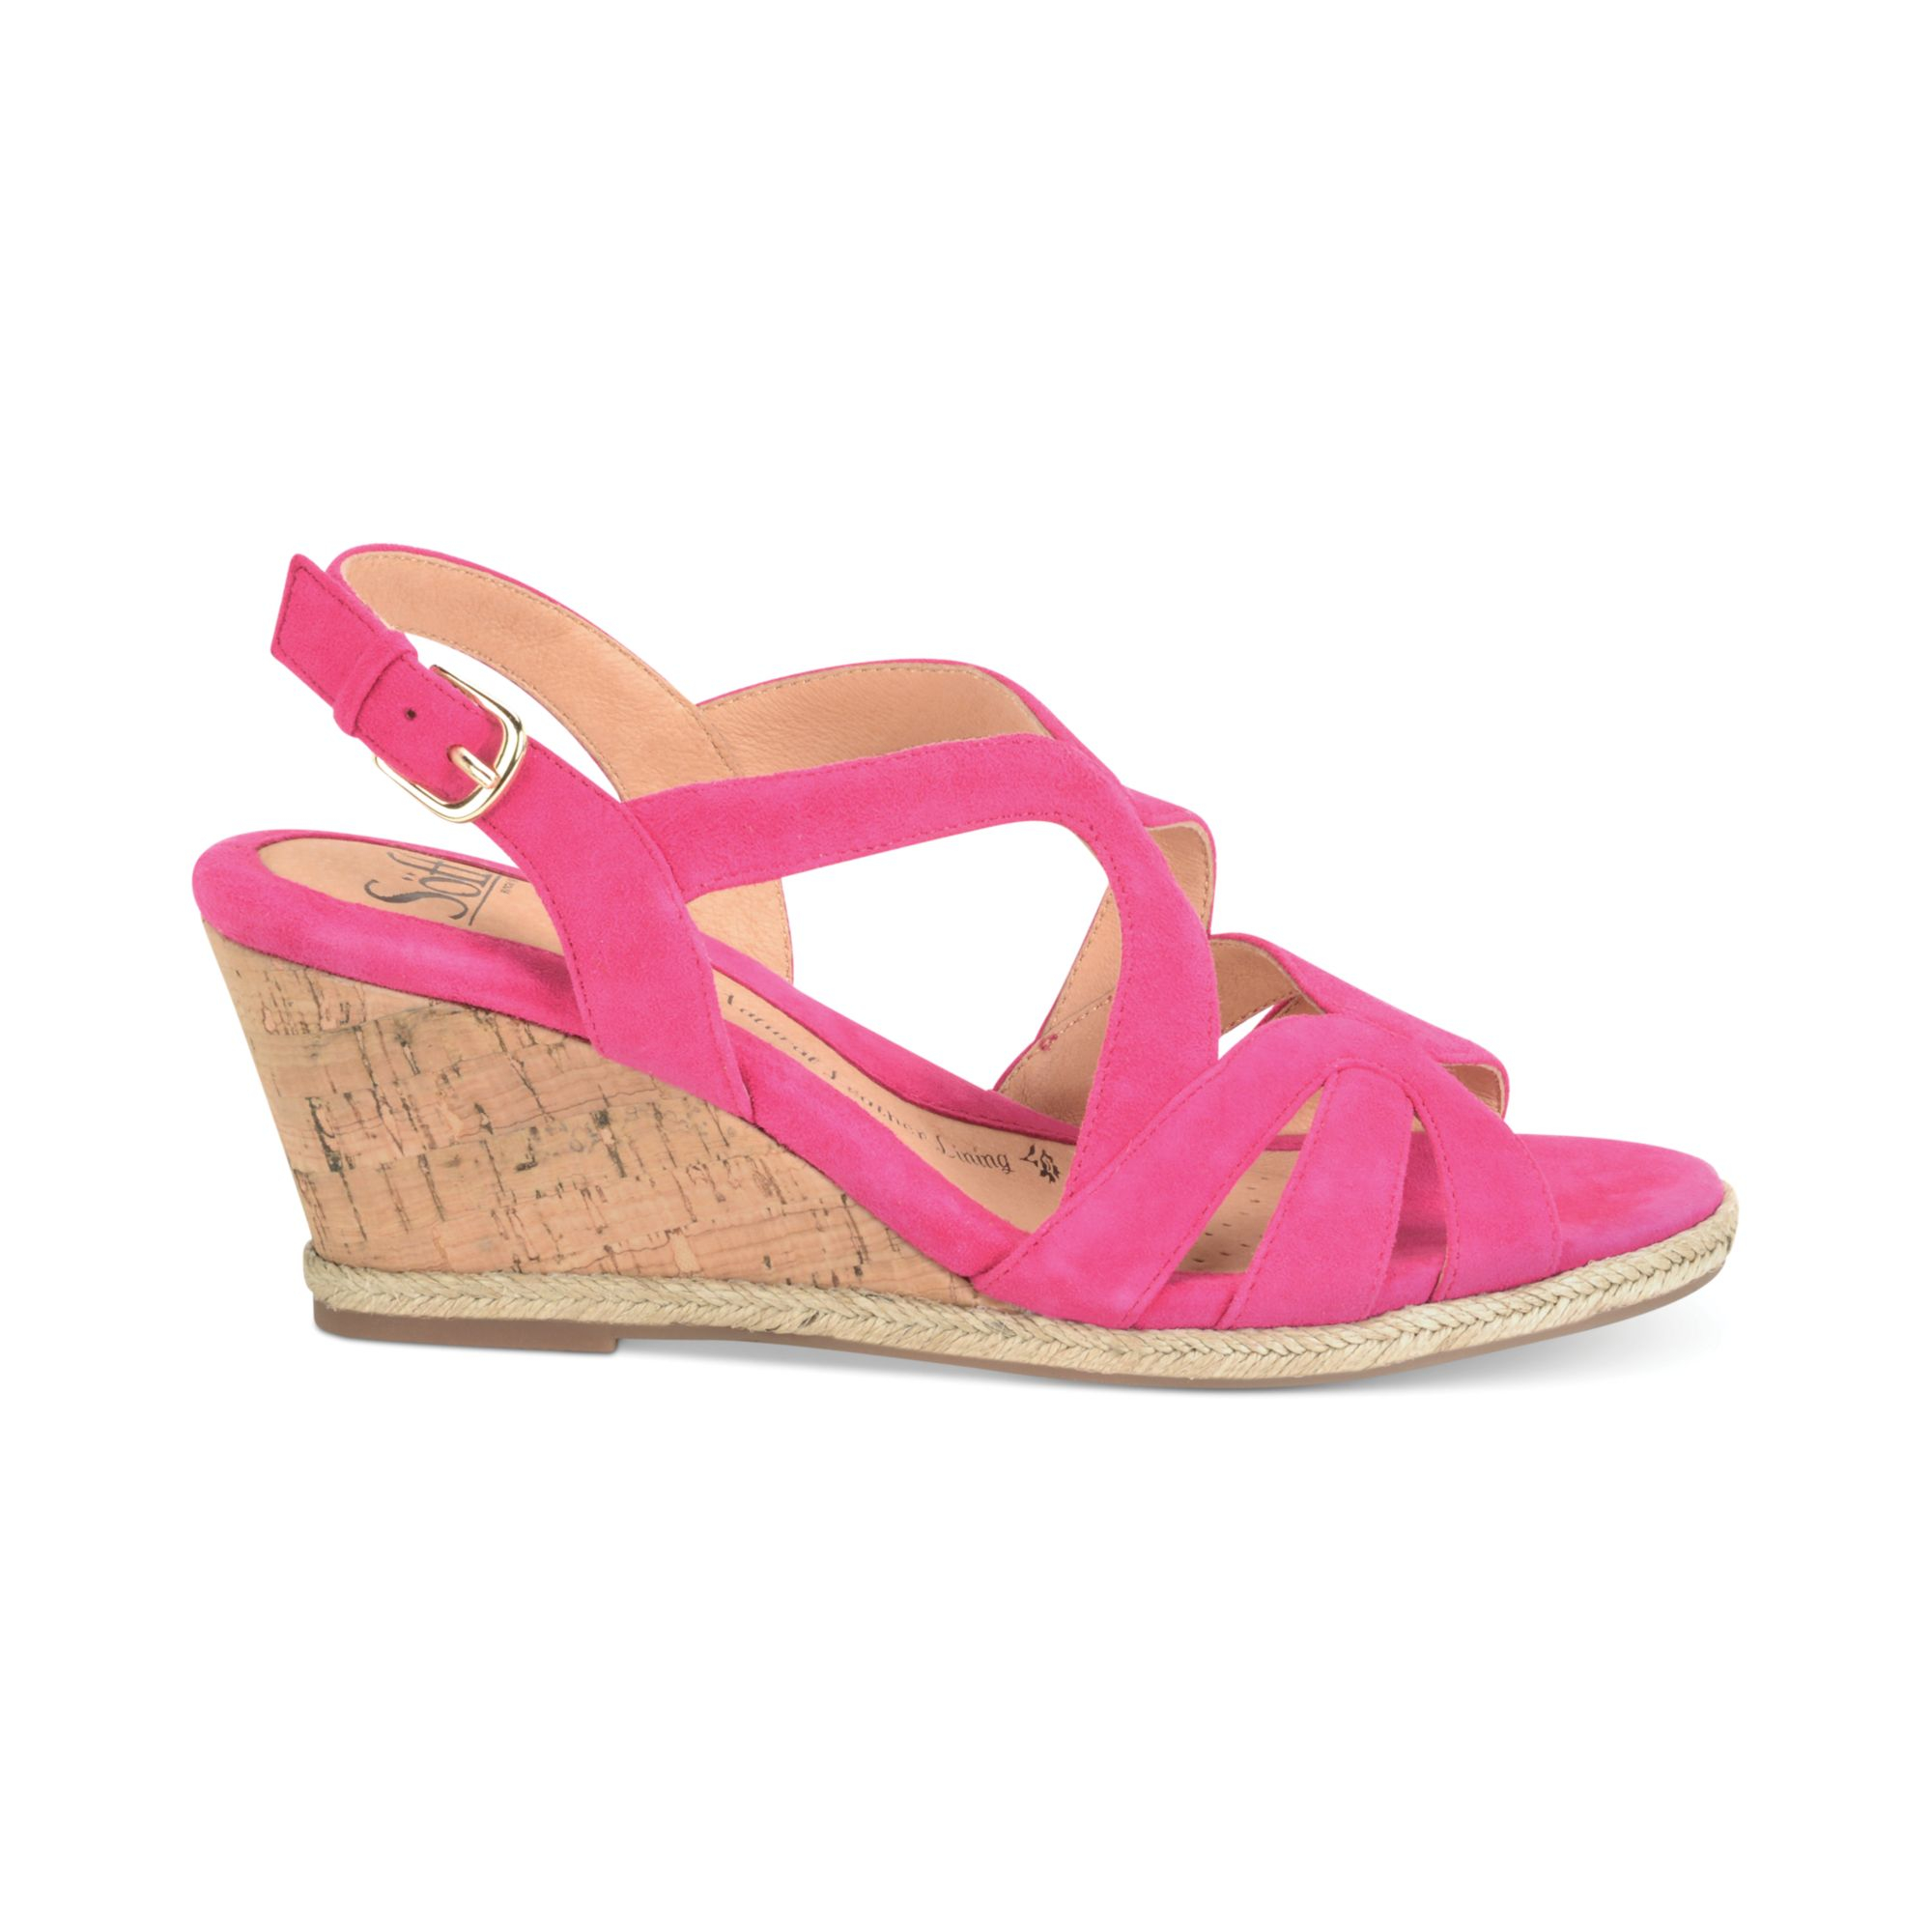 Söfft Ilene Wedge Sandals in Pink (Raspberry) | Lyst